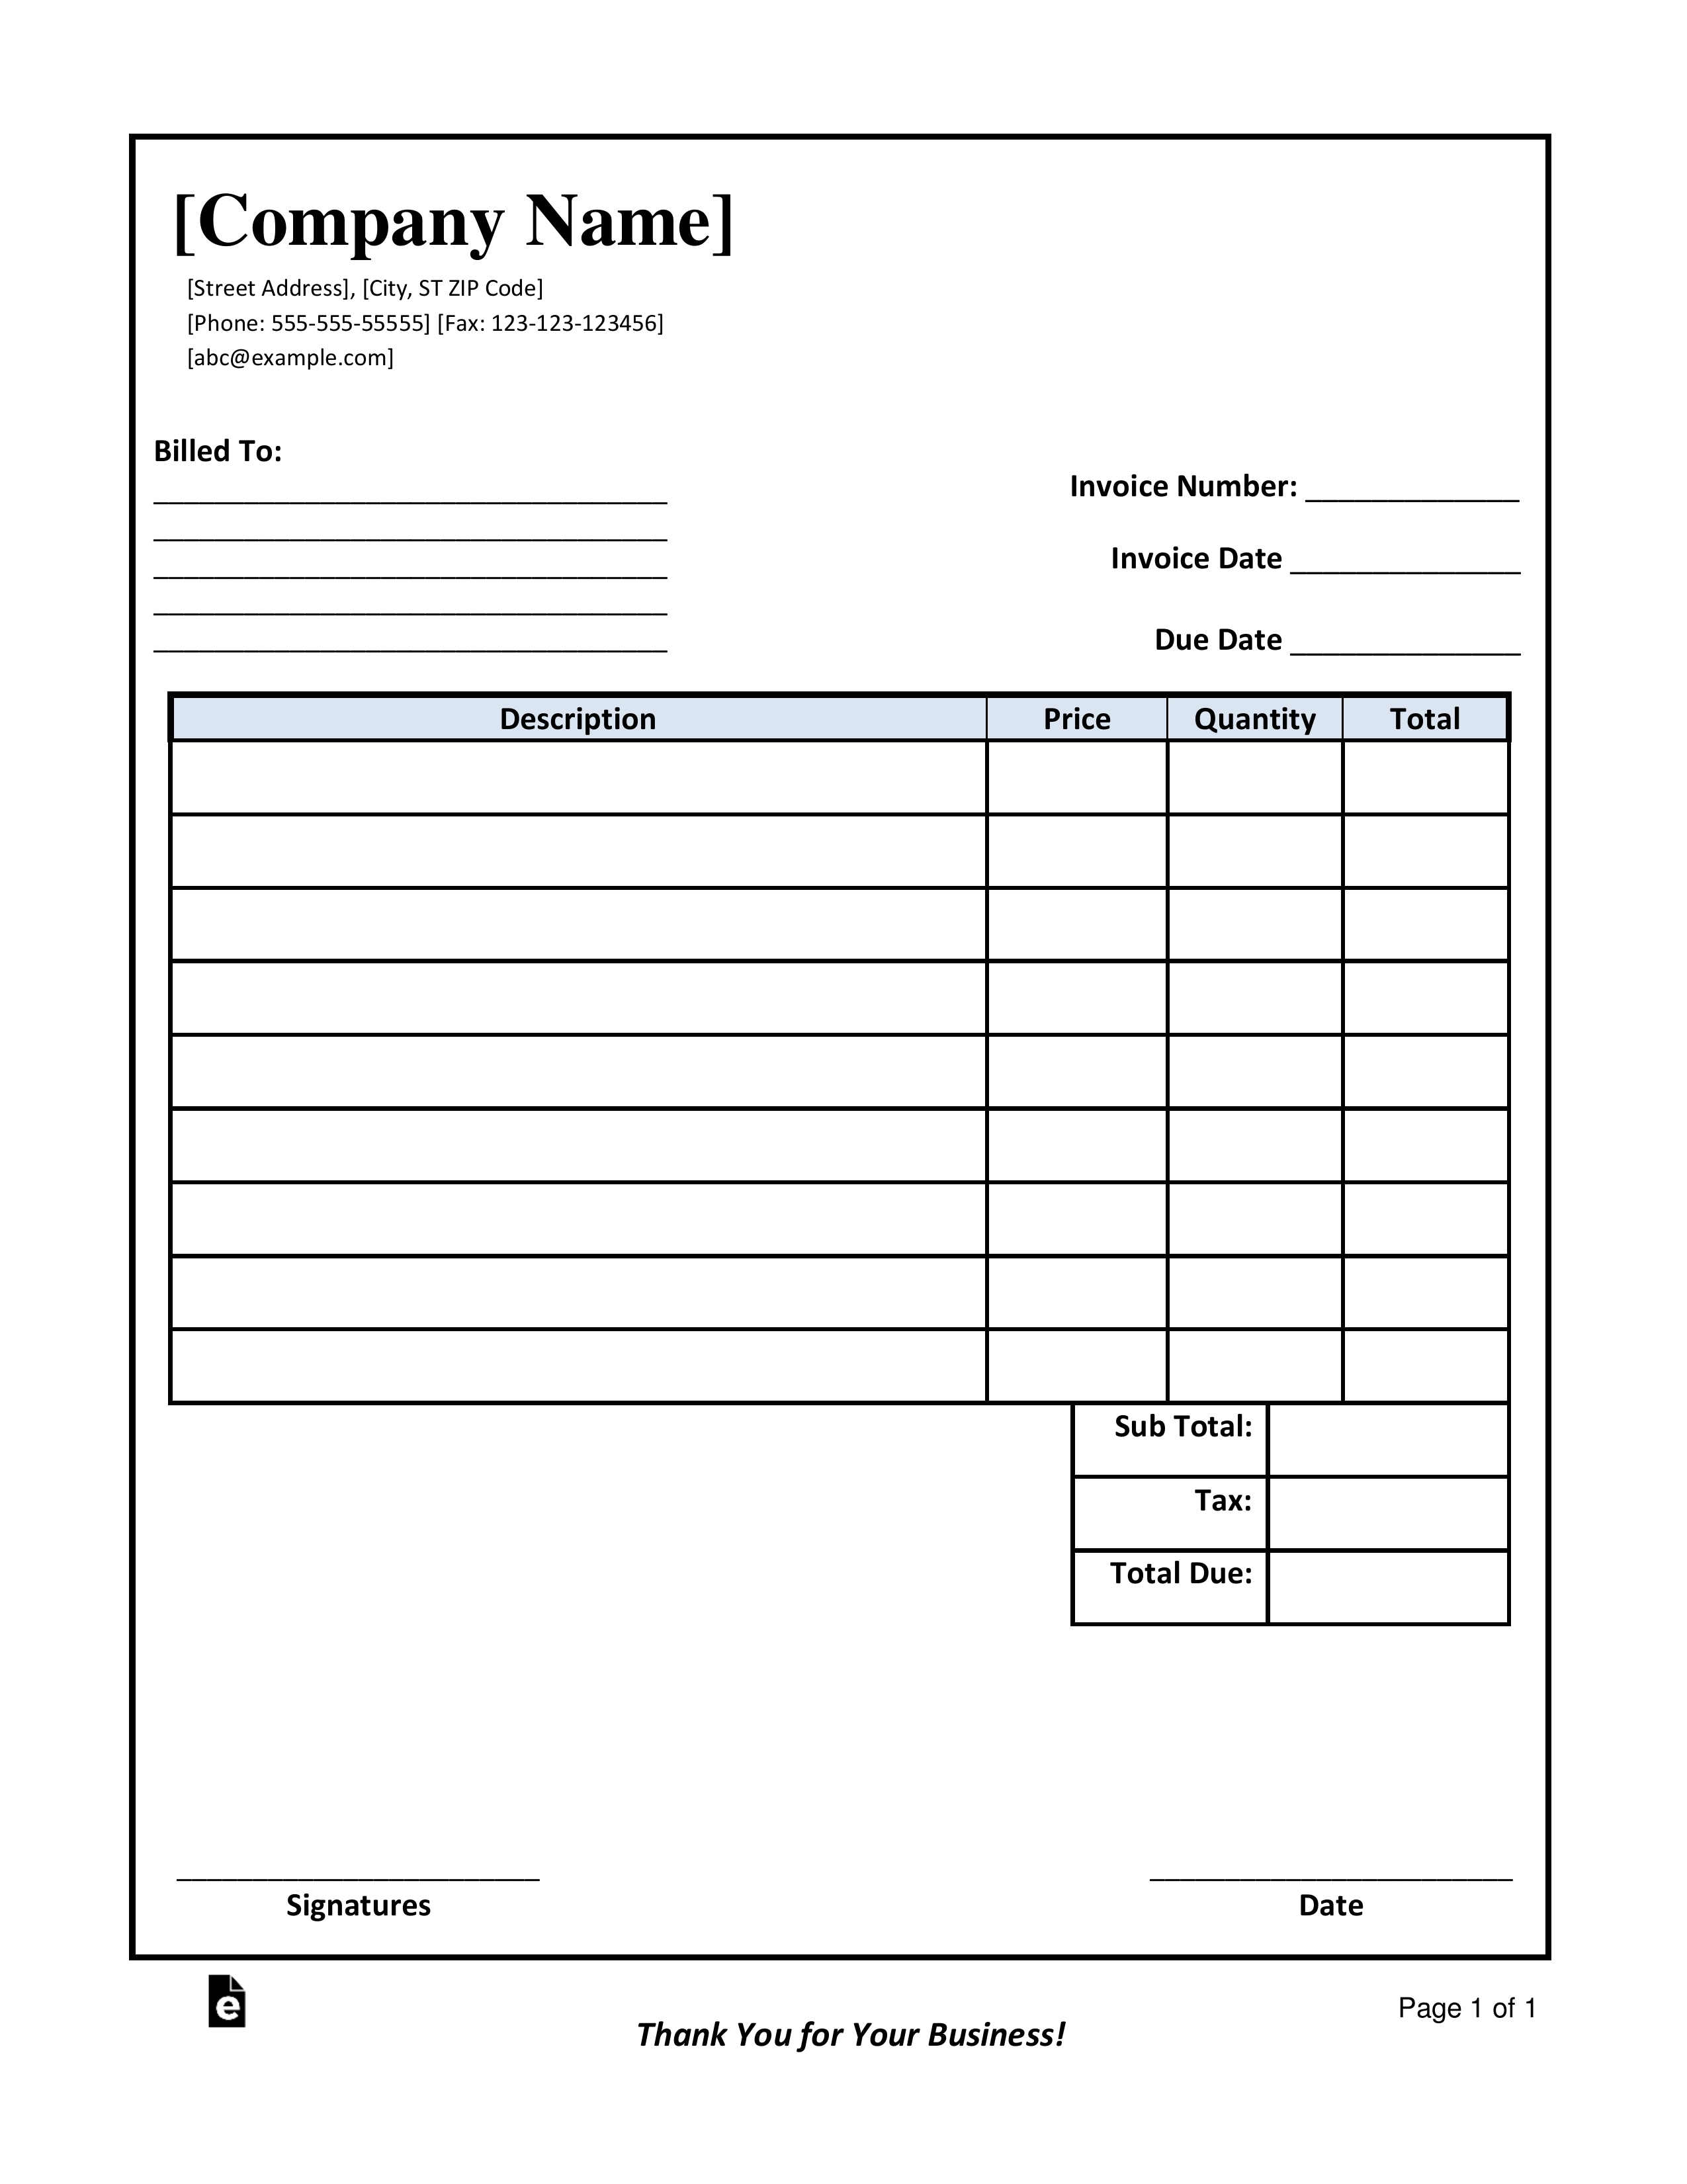 free vendor invoice template word pdf eforms free sample of vendor invoice